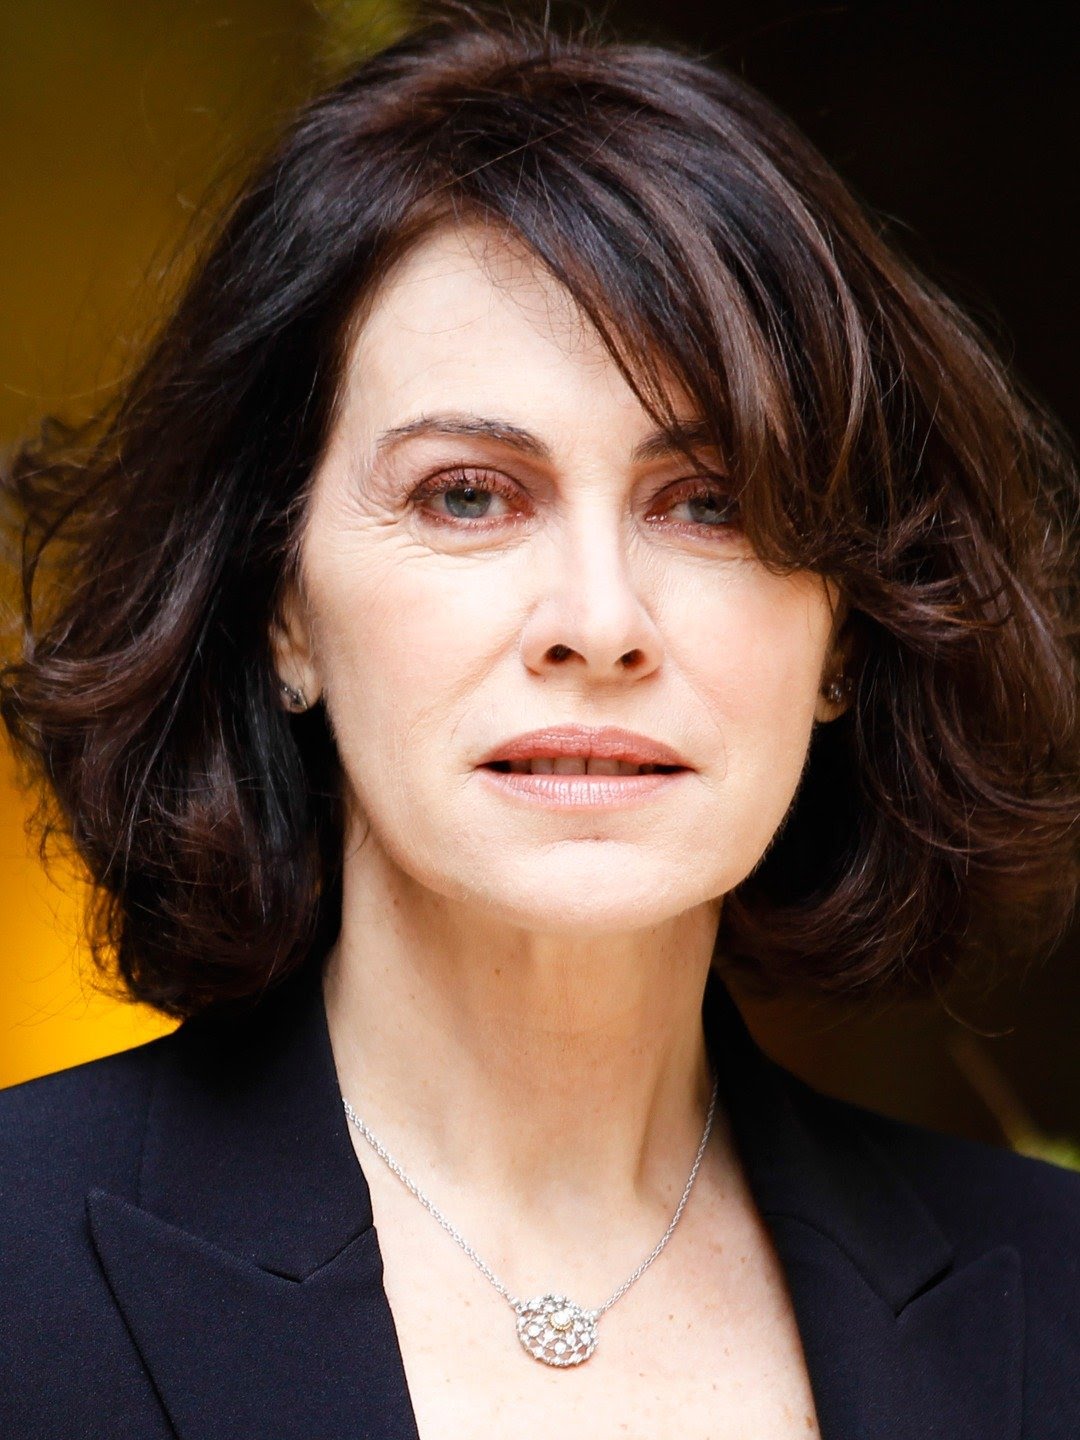 Elena Sofia Ricci Italian Actress, Director, Writer